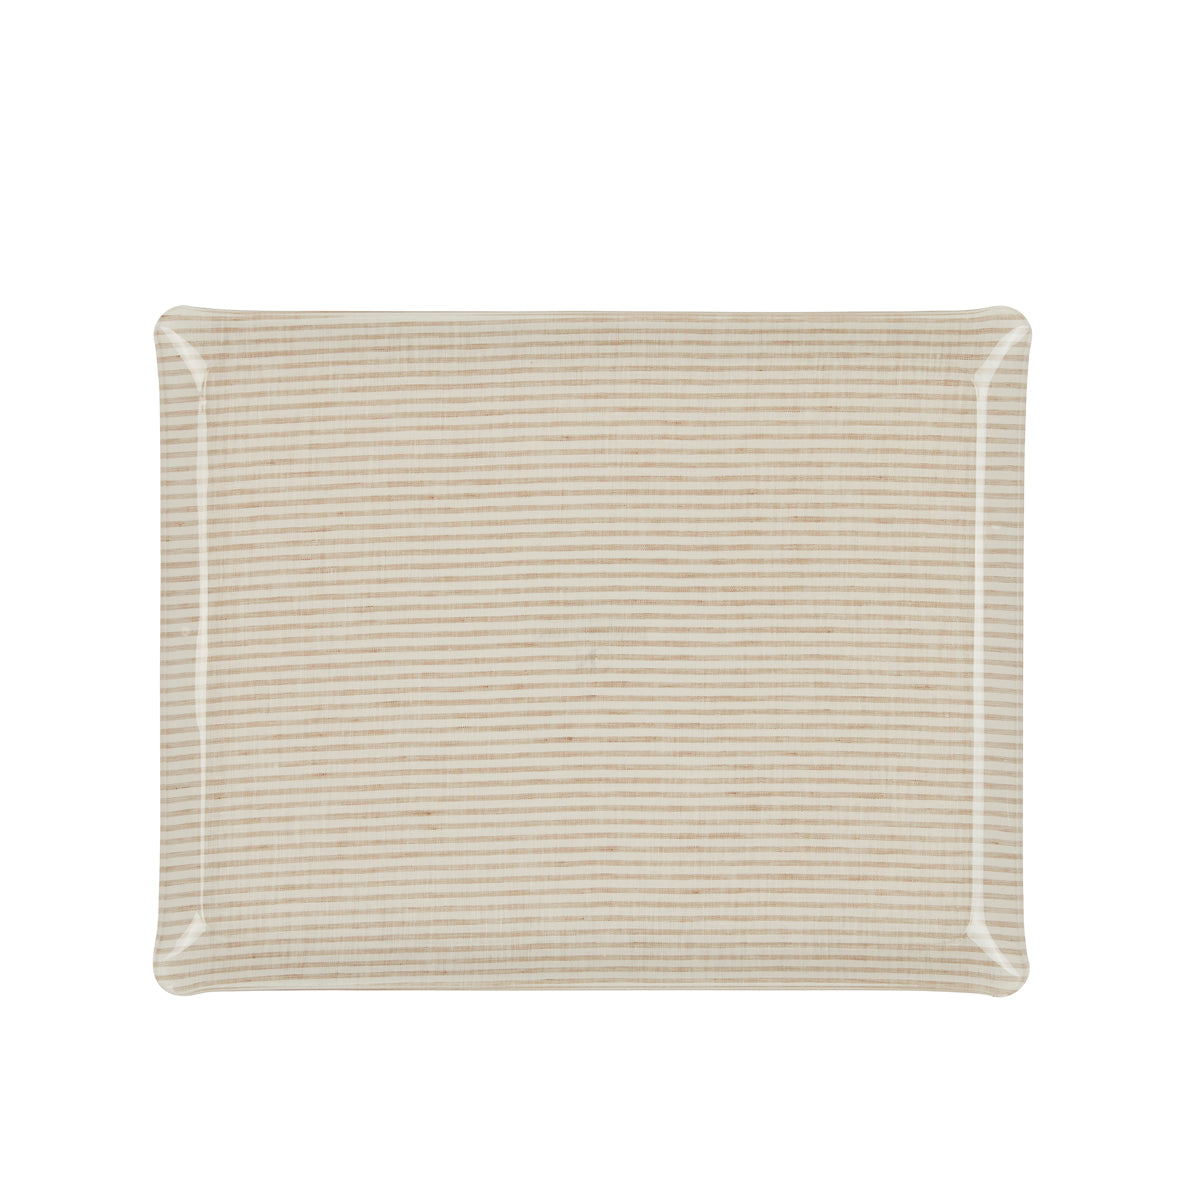 Fabric Tray Large 46X36 - Stripe Beige + White